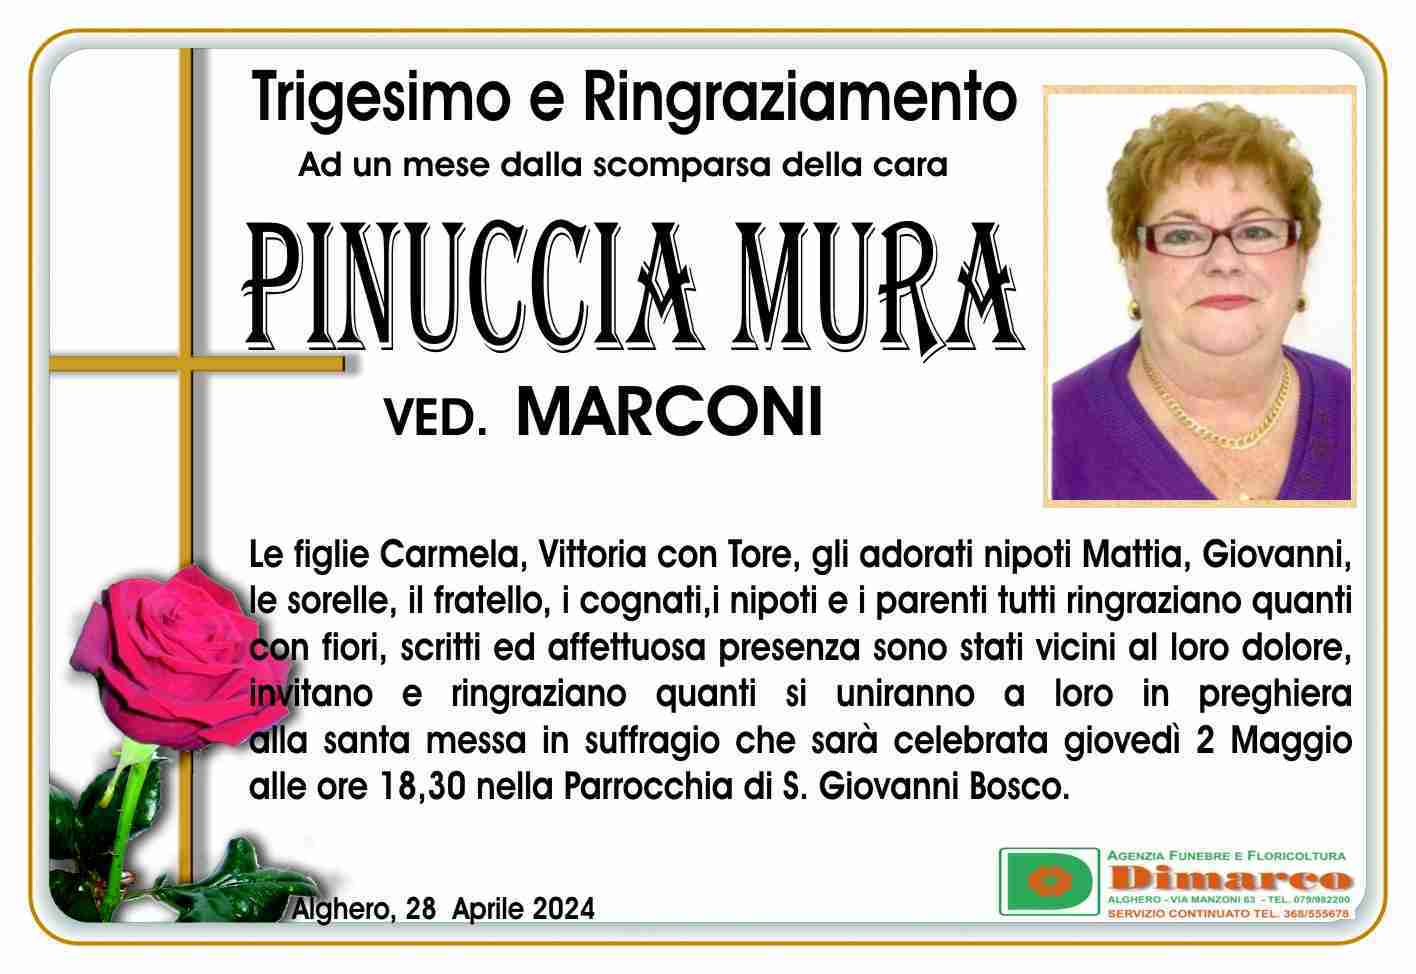 Pinuccia Mura ved. Marconi